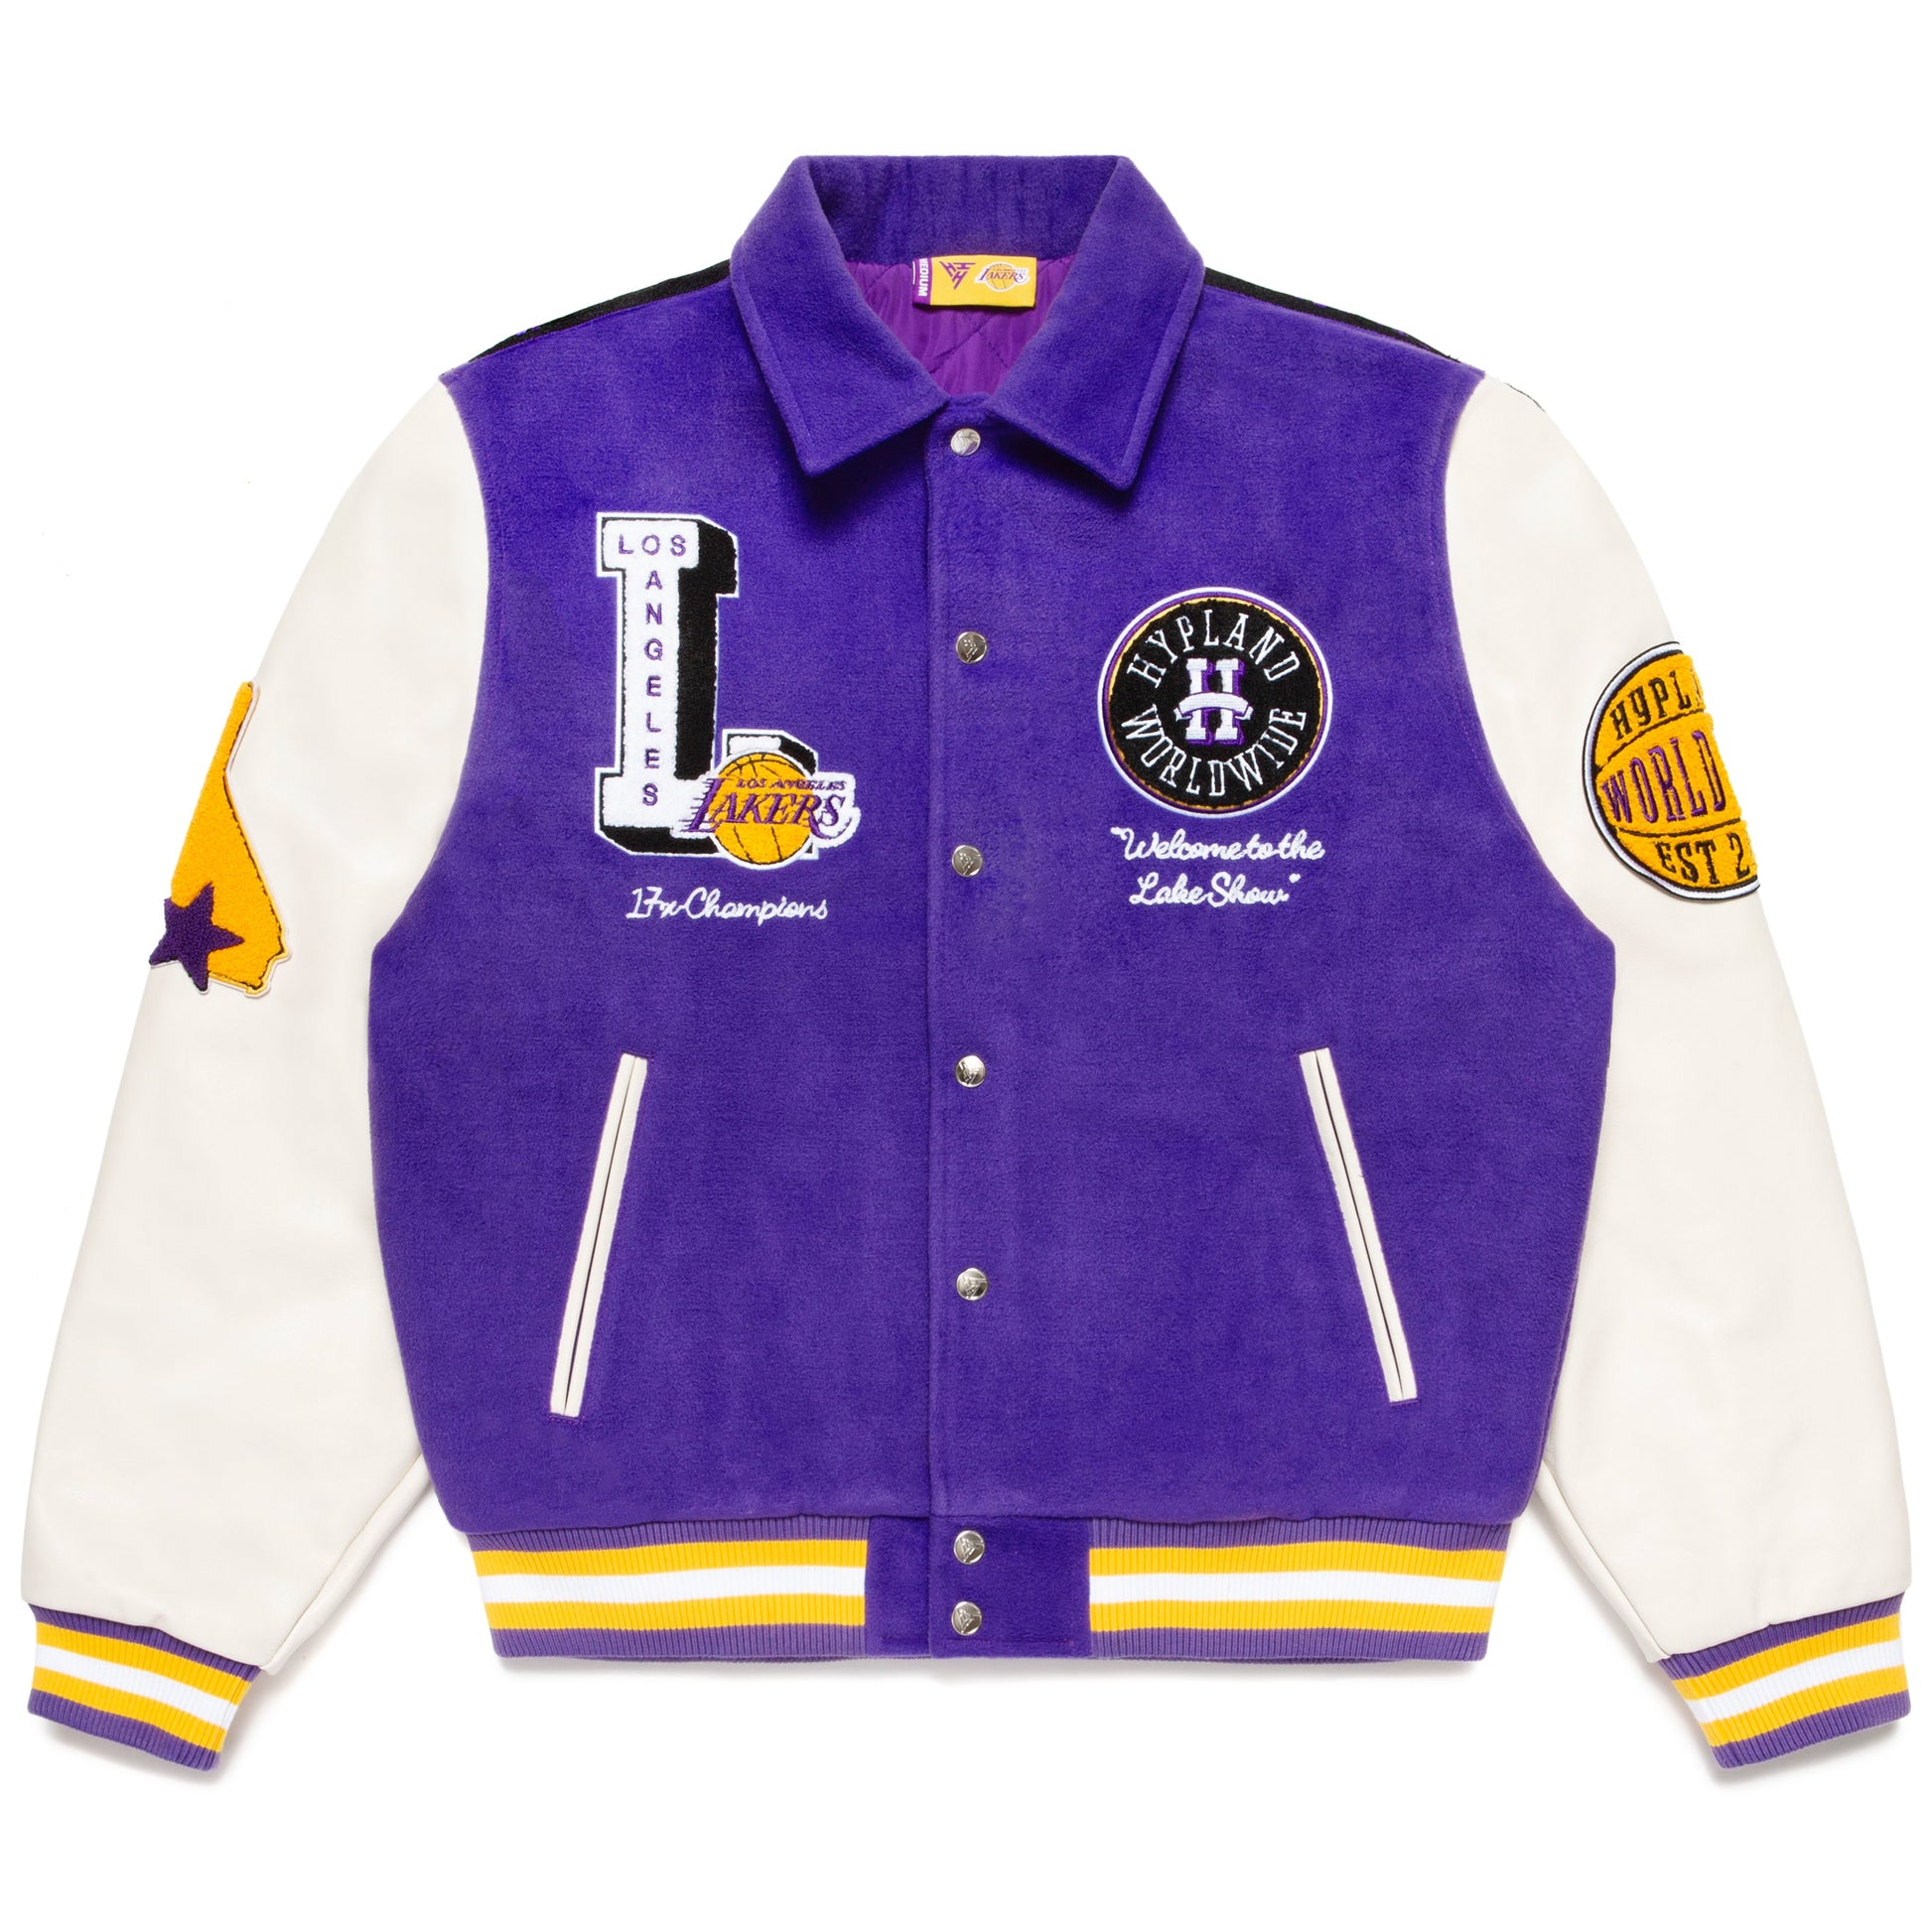 Official Kids Los Angeles Lakers Apparel & Merchandise